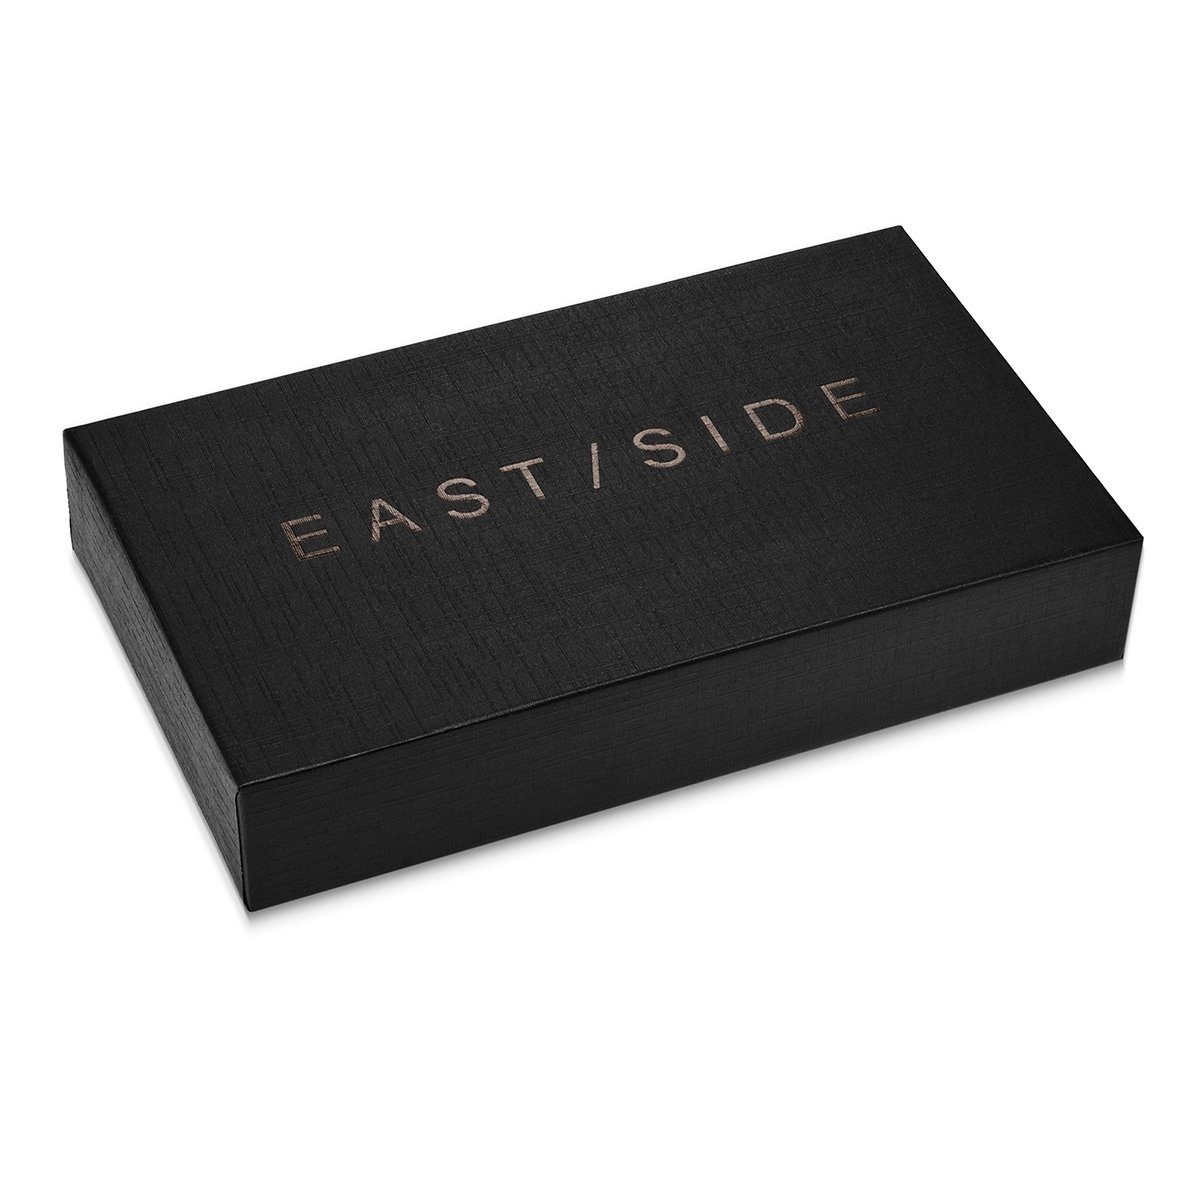 Echtleder-Armband Eastside Automatikuhr schwarz, Grand mit